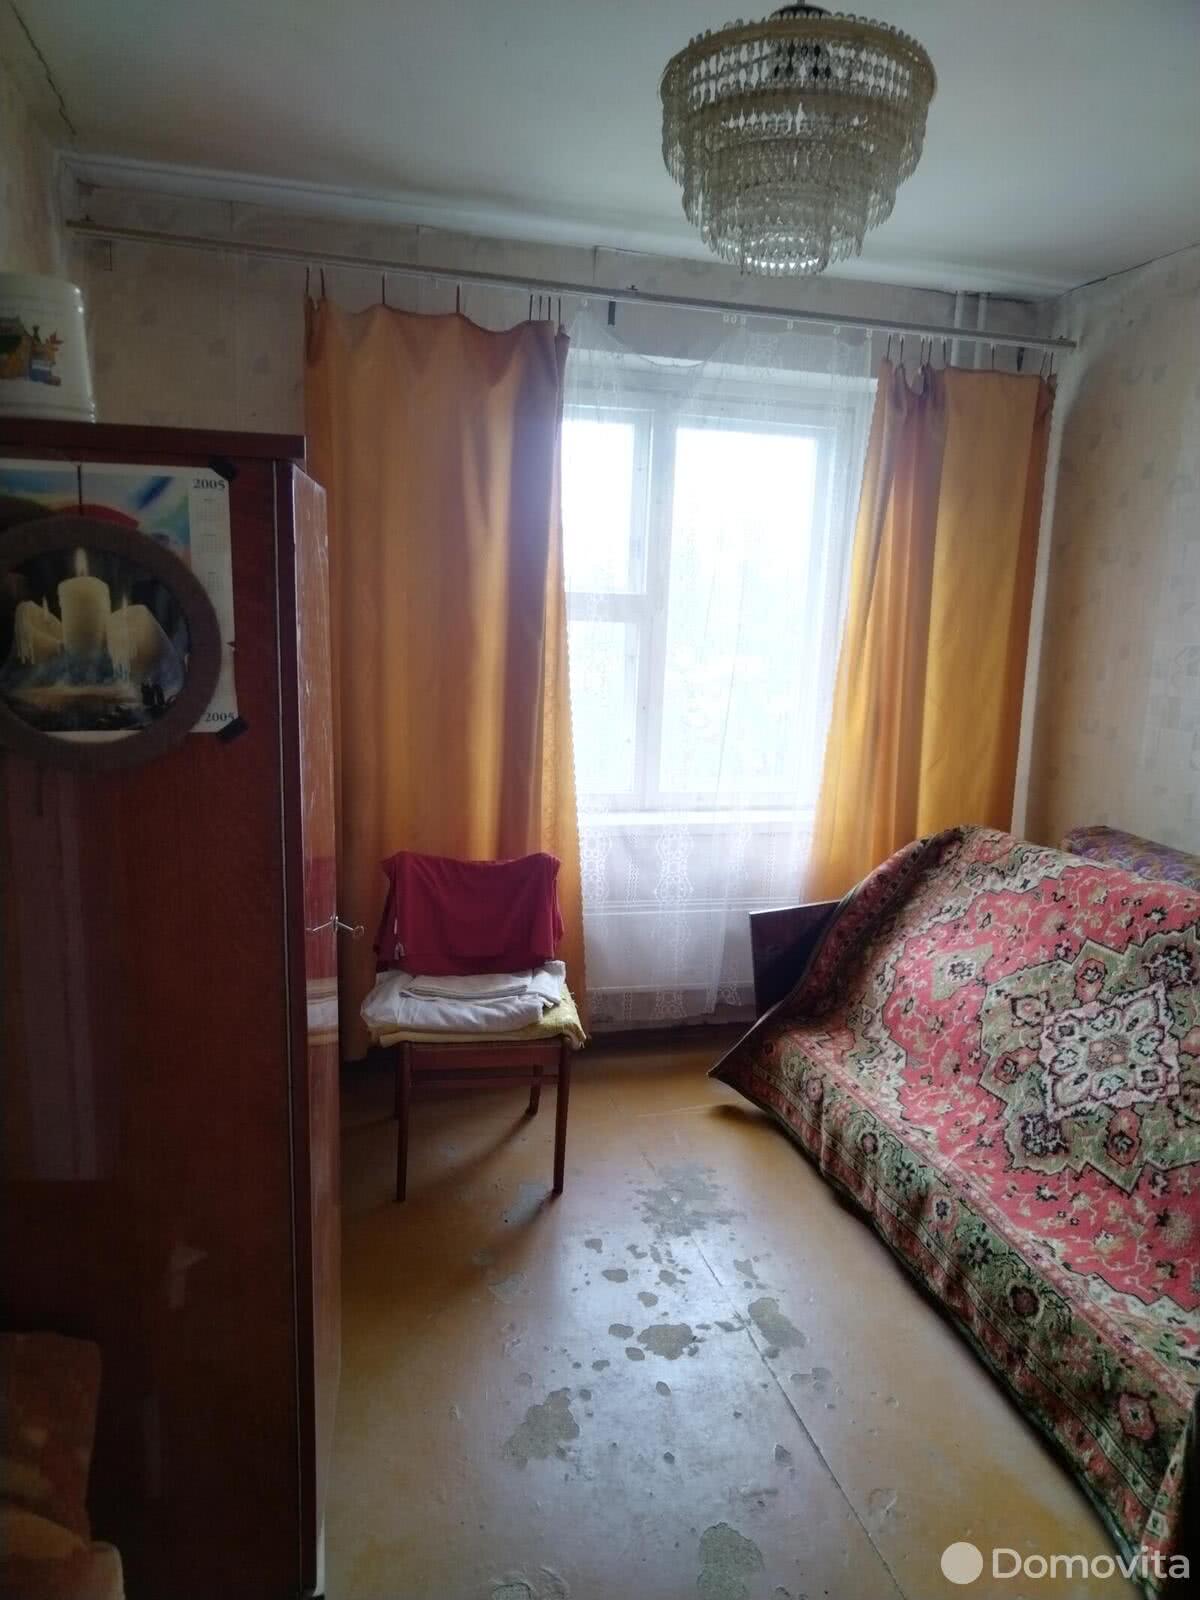 Цена продажи квартиры, Витебск, пр-т Черняховского, д. 32